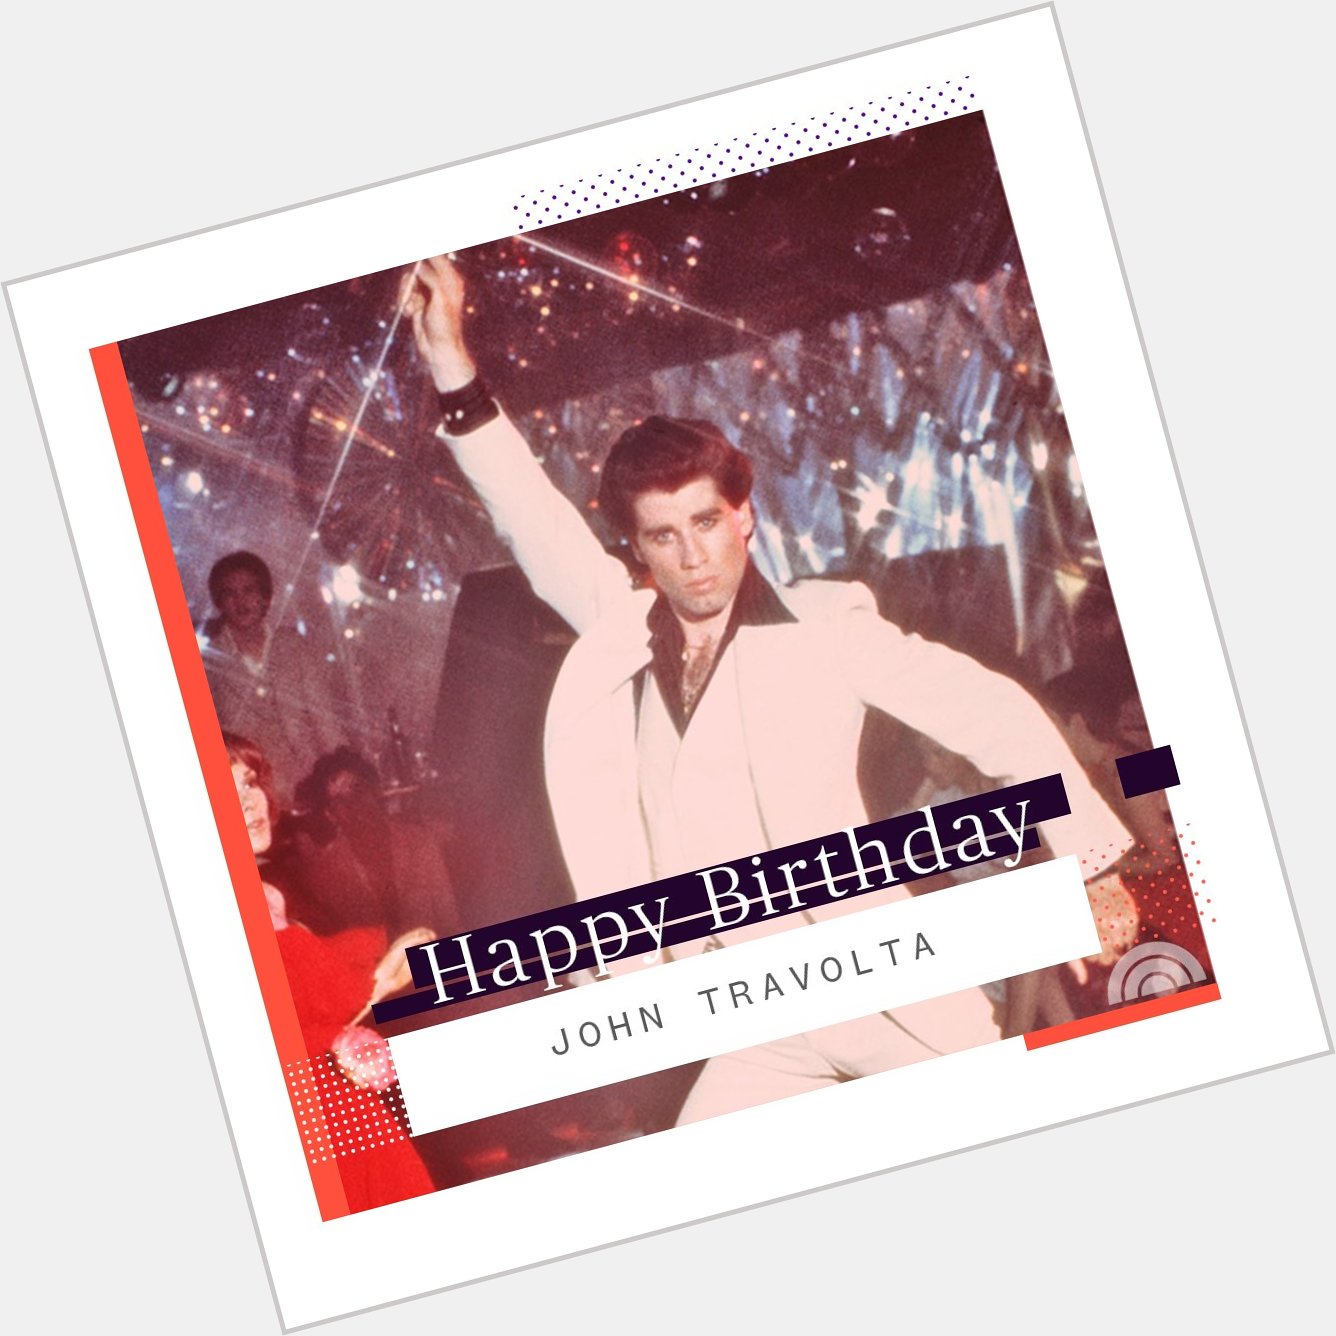 Happy 65th birthday, John Travolta! 